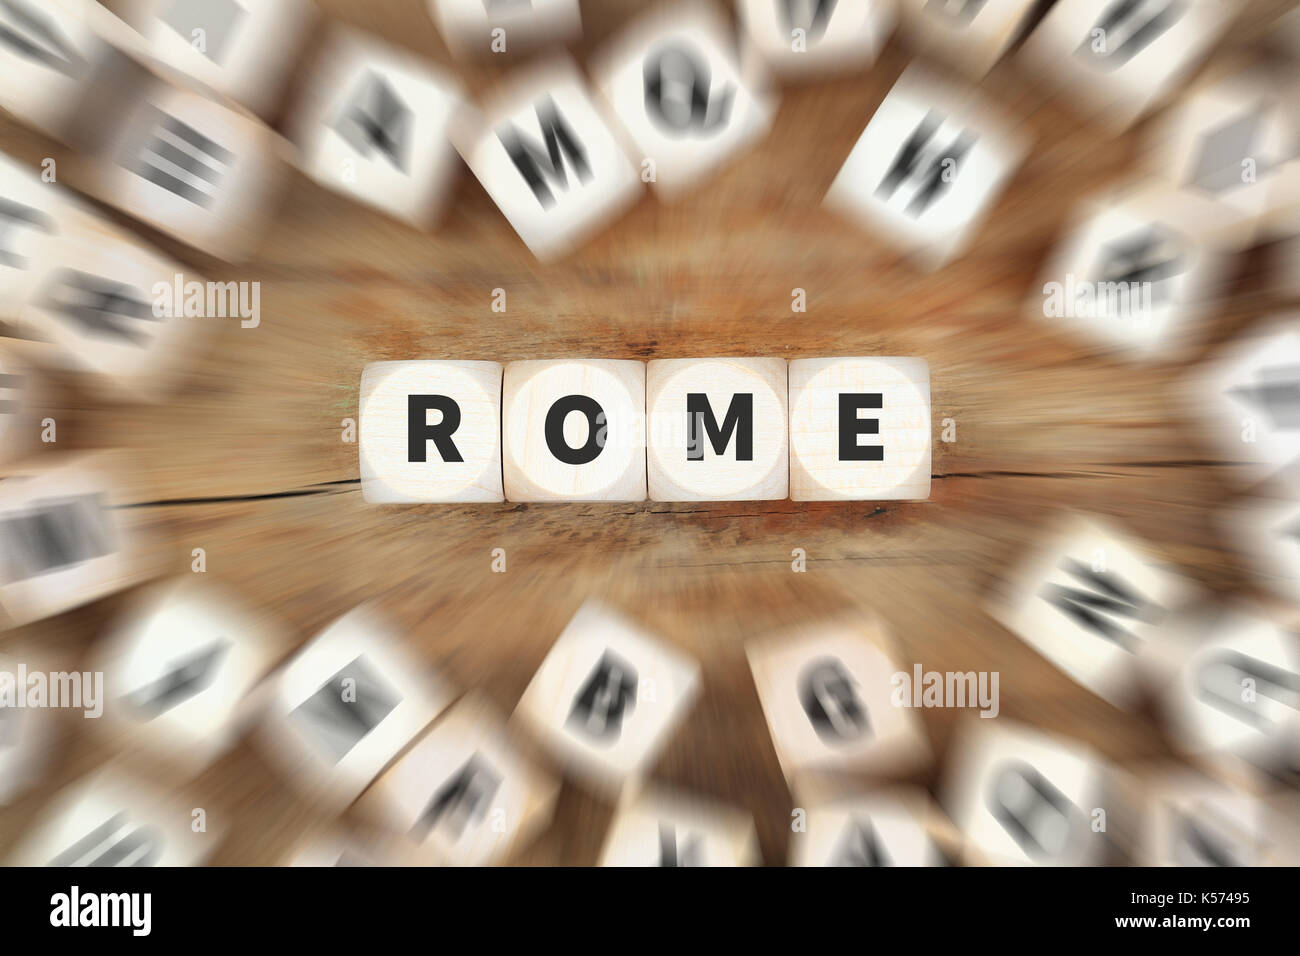 Stadt Rom Italien Reise Reisen Würfel Business Konzept Idee Stockfoto